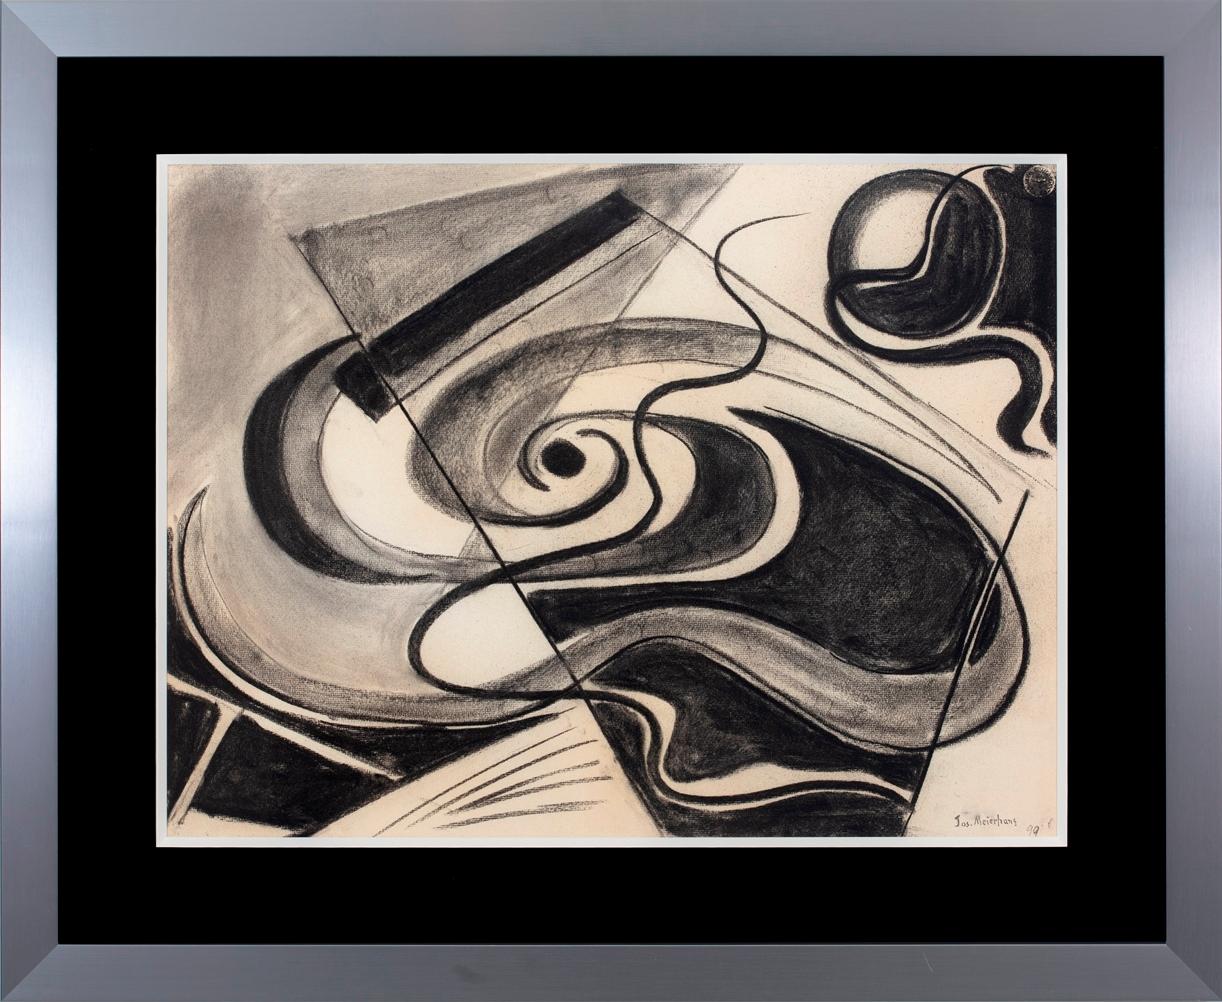 Joseph Meierhans Abstract Drawing - "Cyclone"